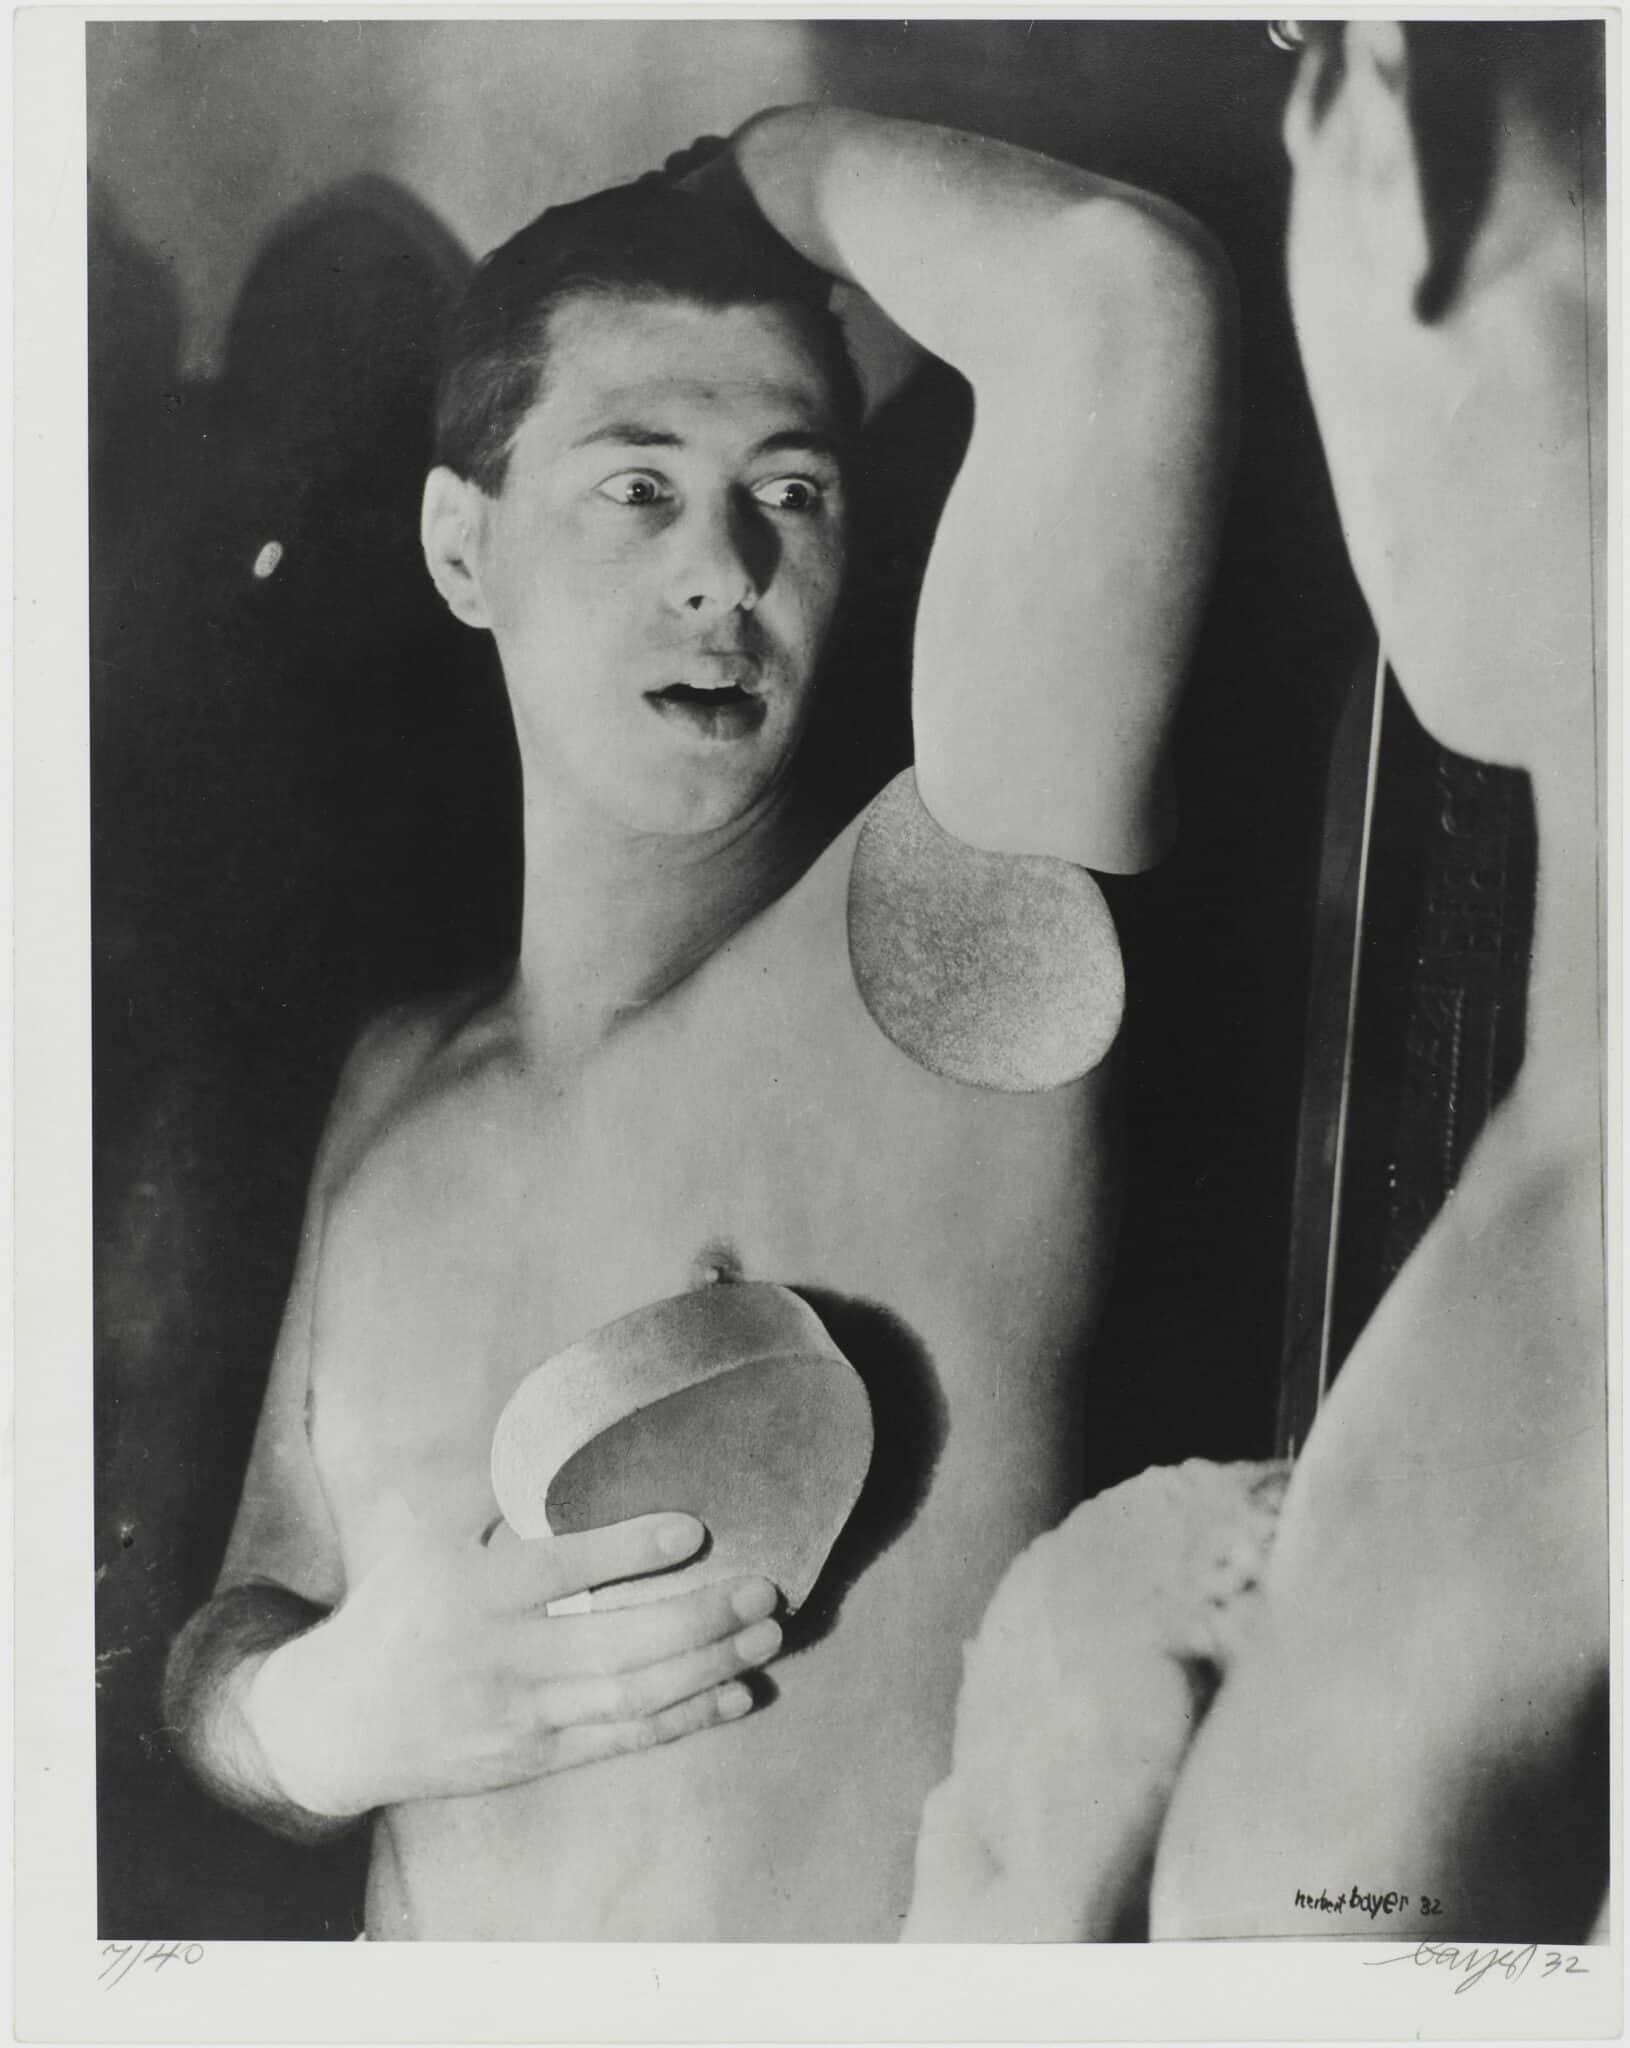 Herbert Bayer, Self-portrait, 1932.